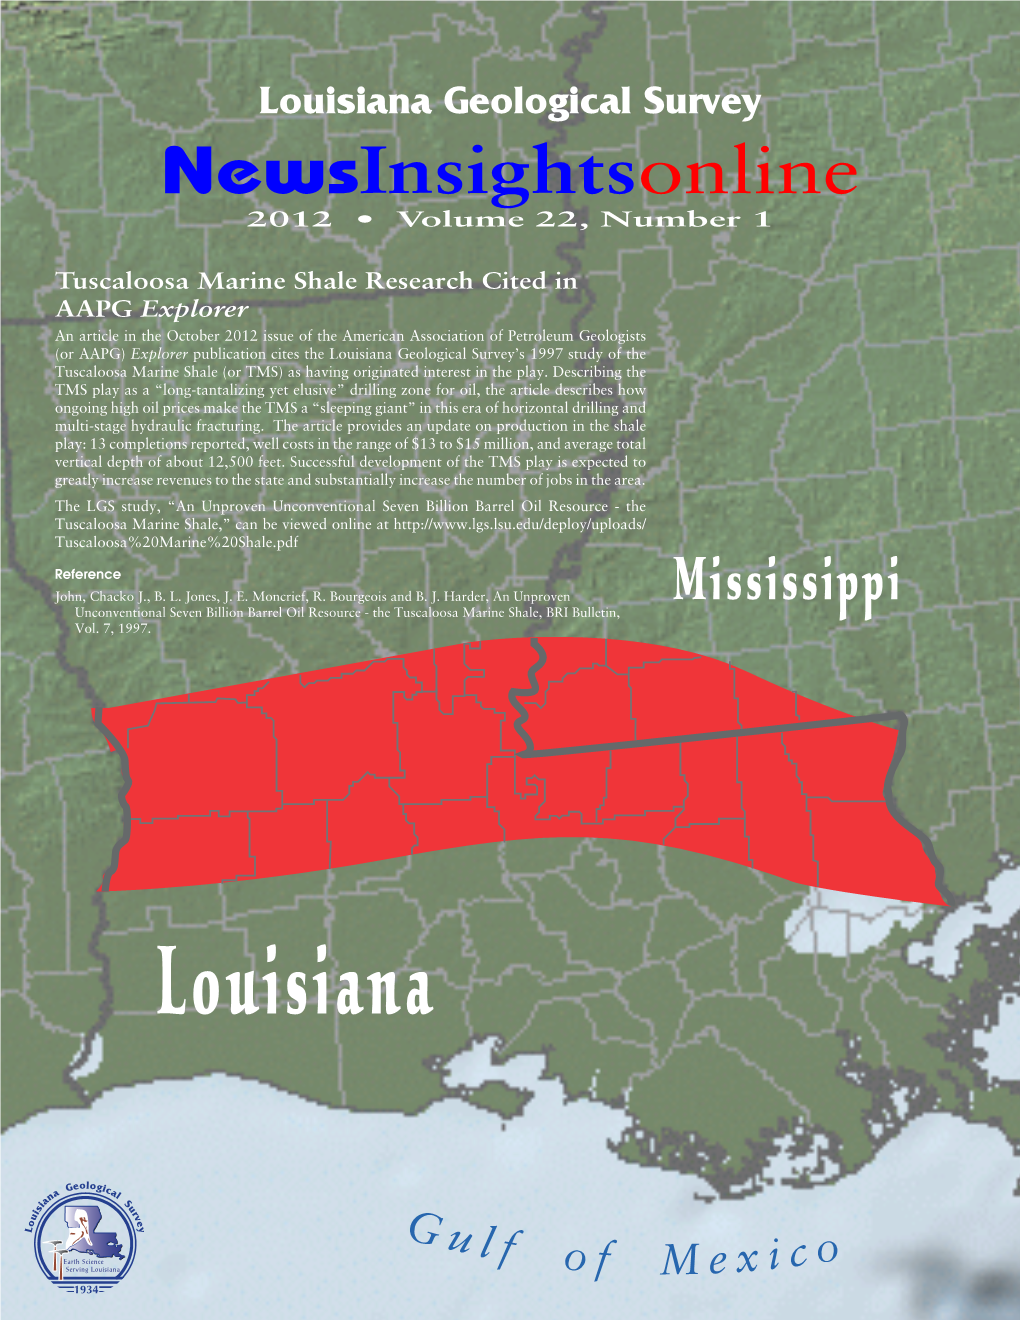 Louisiana Geological Survey Newsinsightsonline 2012 • Volume 22, Number 1